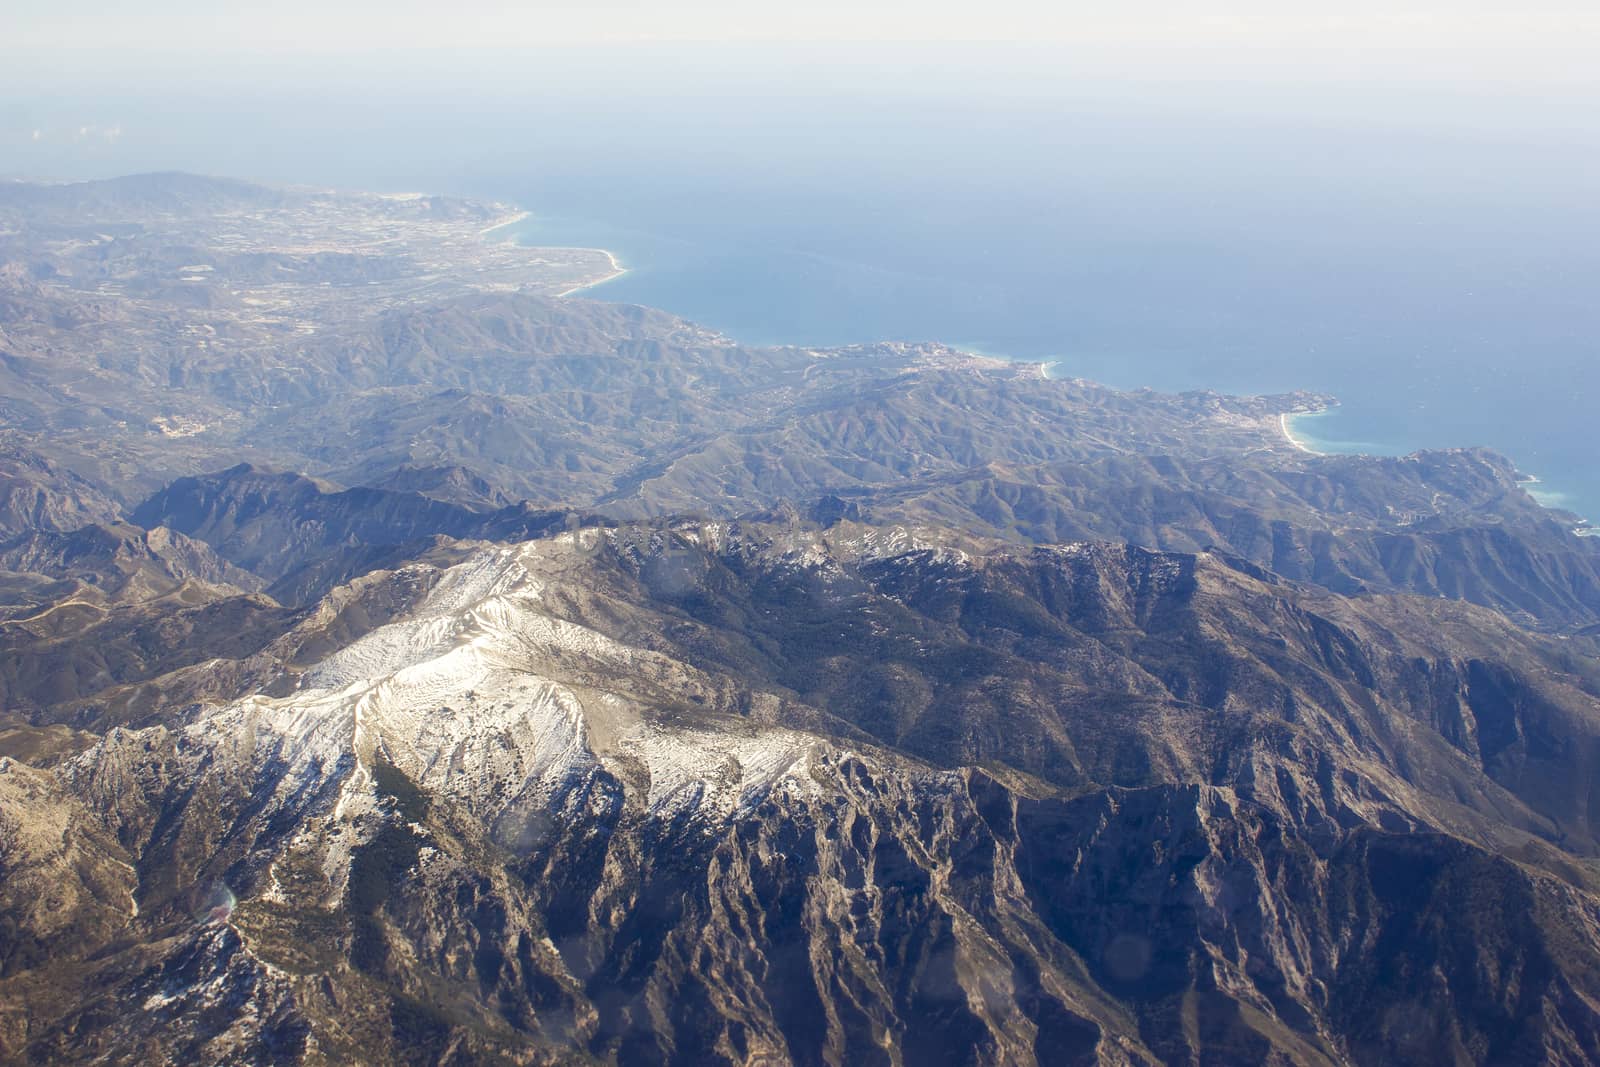 Aerial view of Sierra Nevada in Spain by miradrozdowski